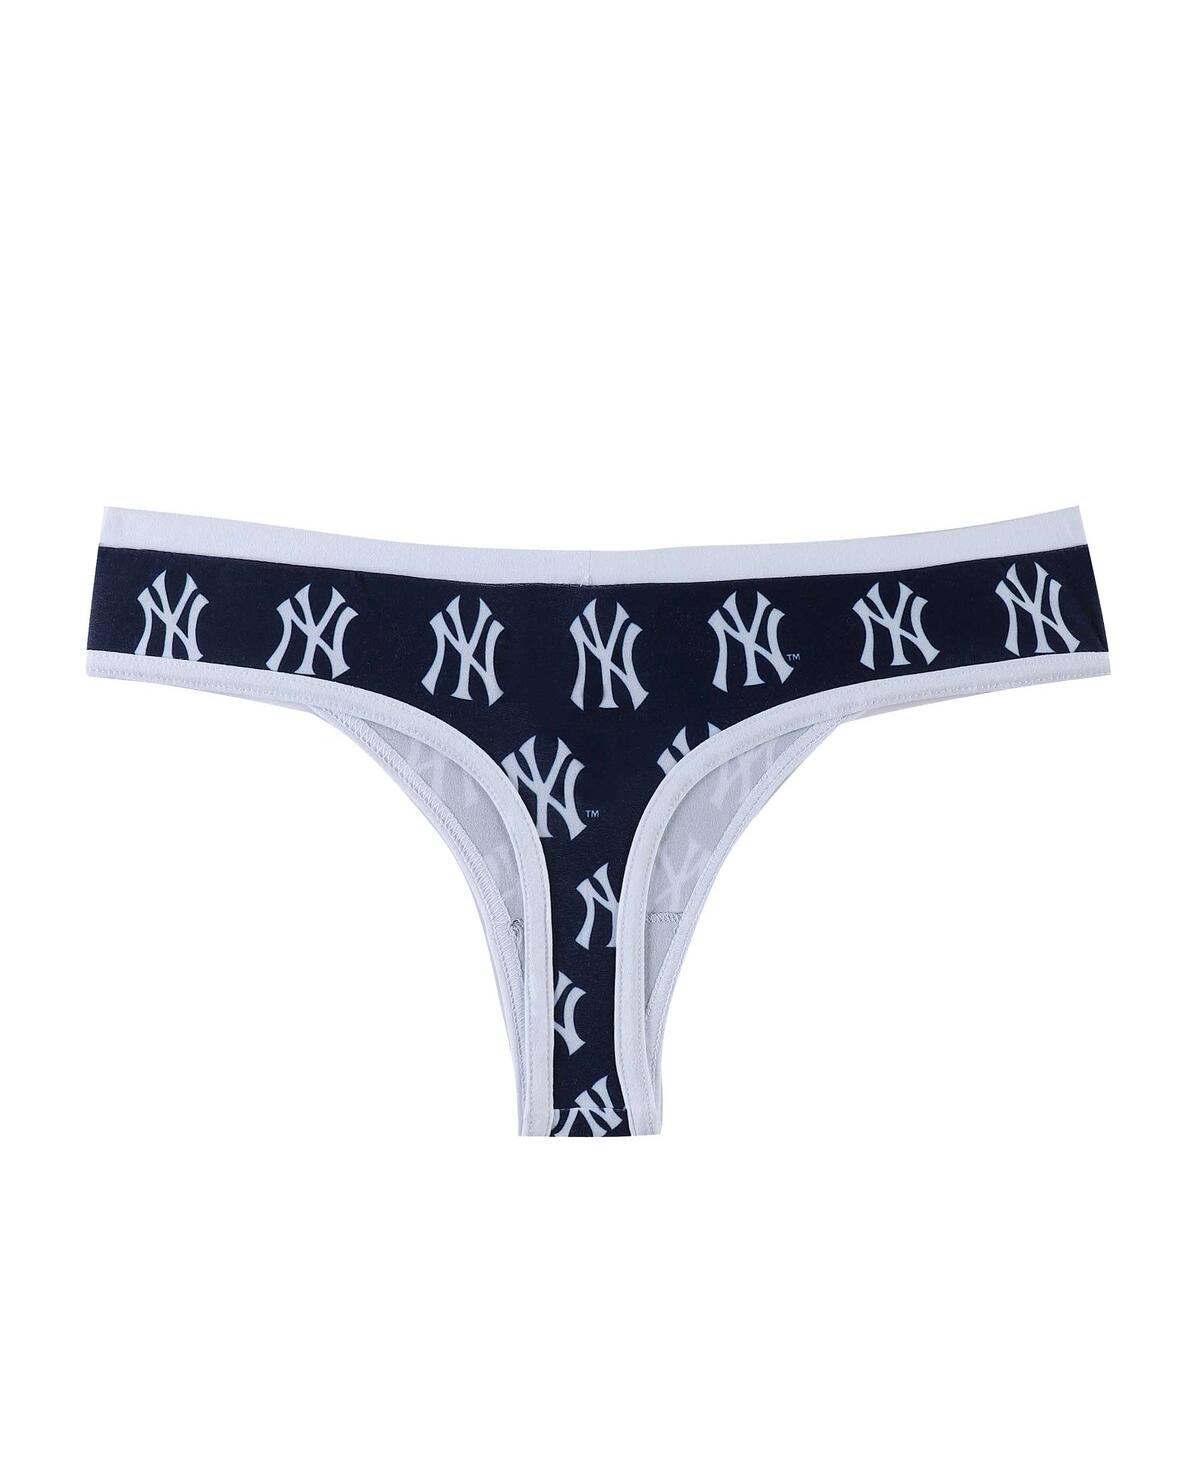 Shop Concepts Sport Women's  Navy New York Yankees Allover Print Knit Thong Set